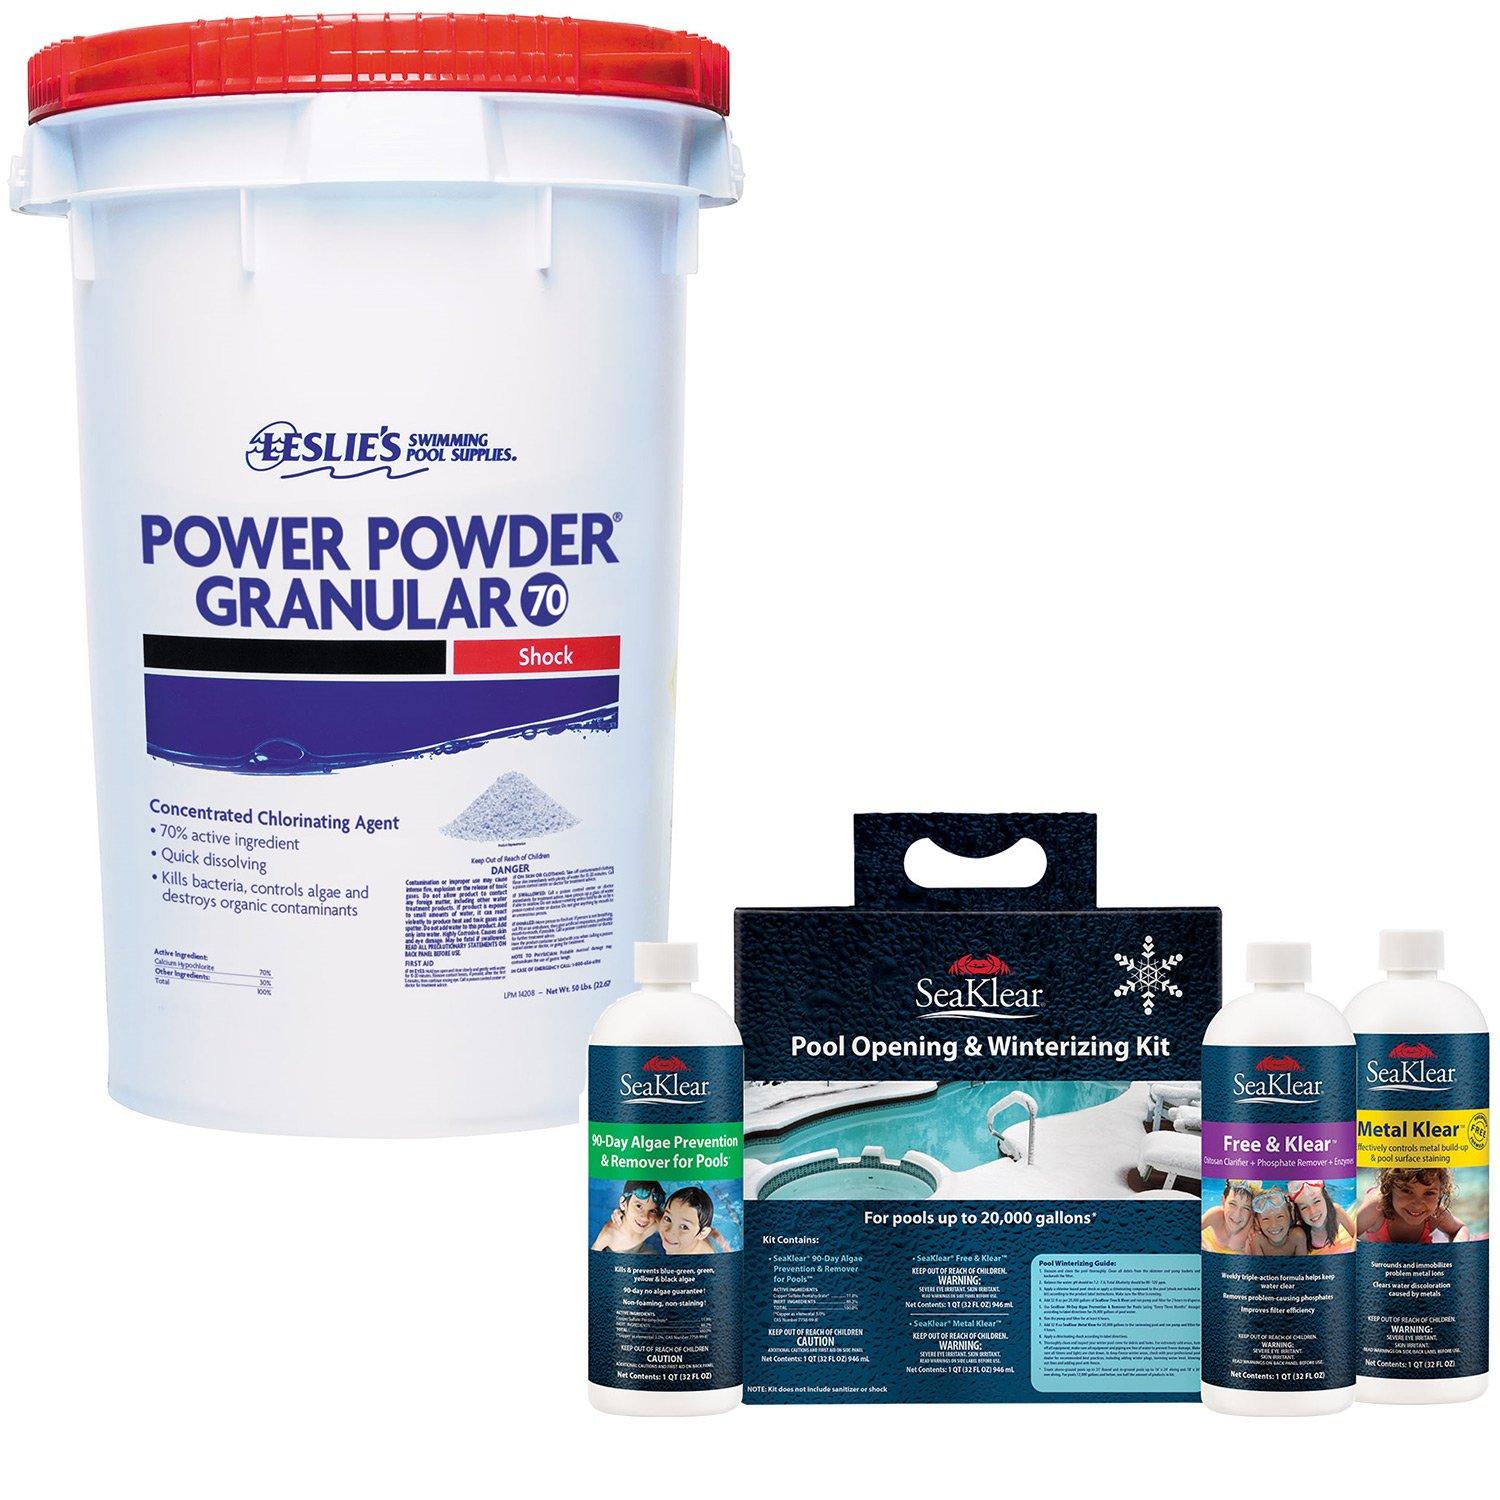 Leslie's  Power Powder Granular 70 Pool Shock 50 lbs with FREE SeaKlear Pool Opening  Winterizing Kit